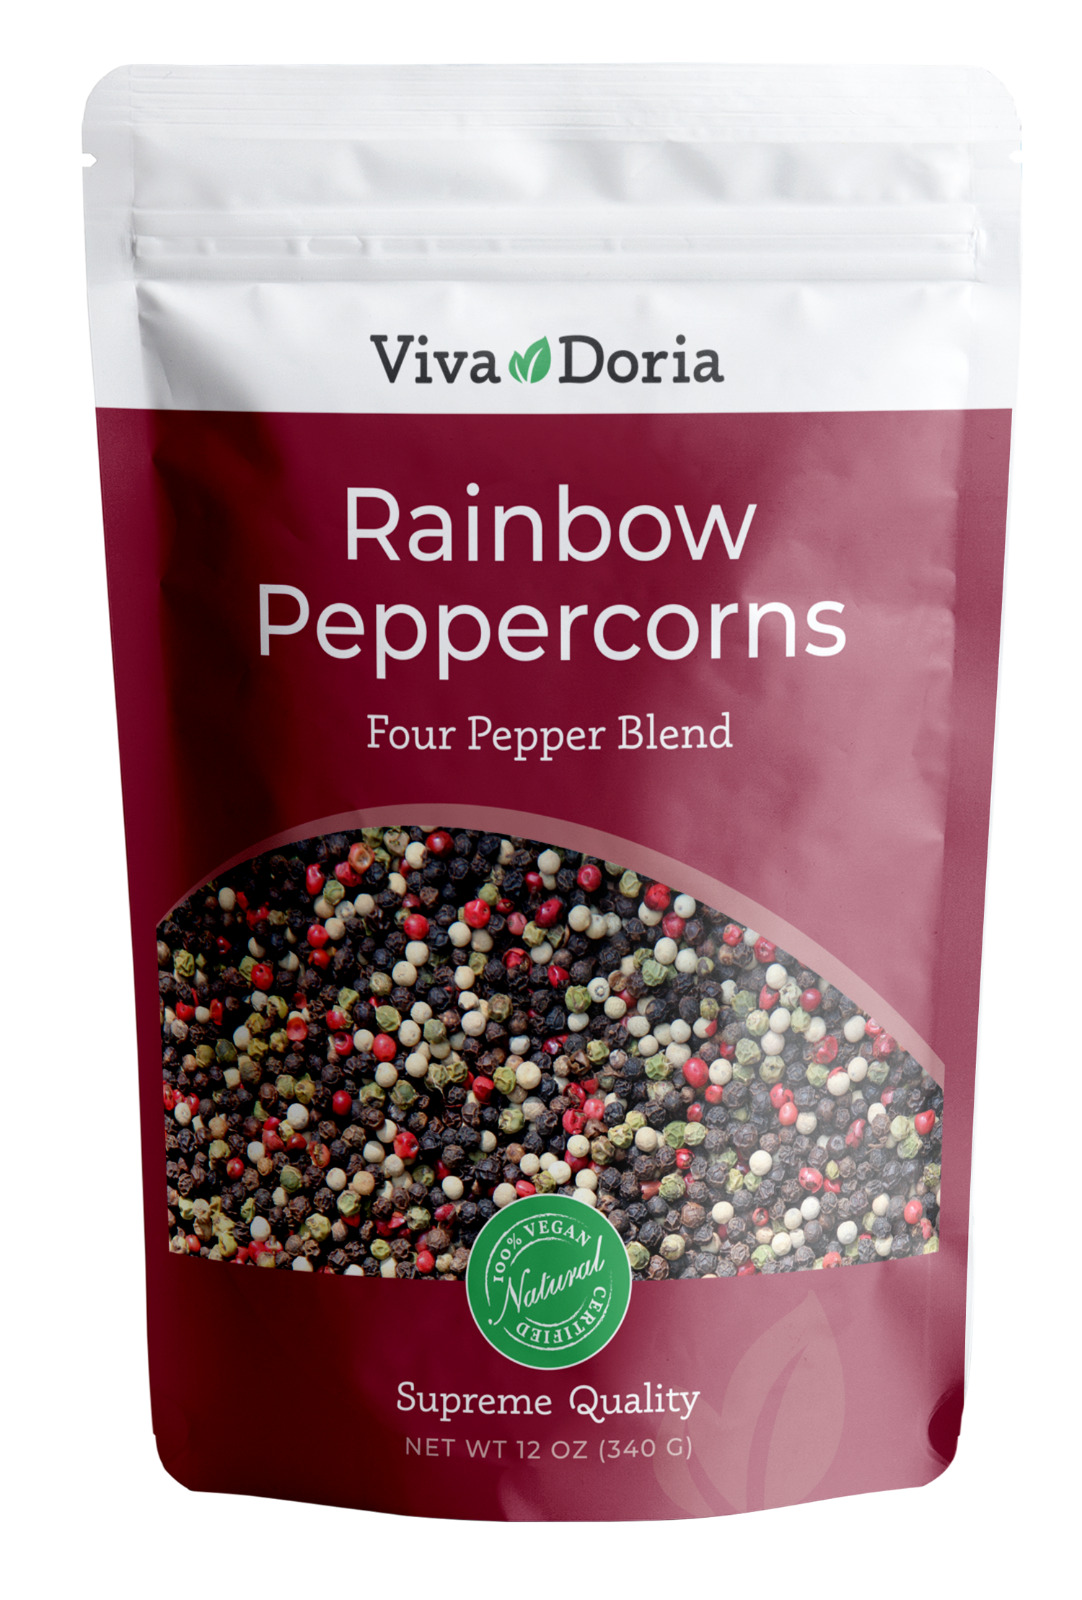 Viva Doria Rainbow Peppercorn, 12 oz - 4 Kind Whole Pepper Blend